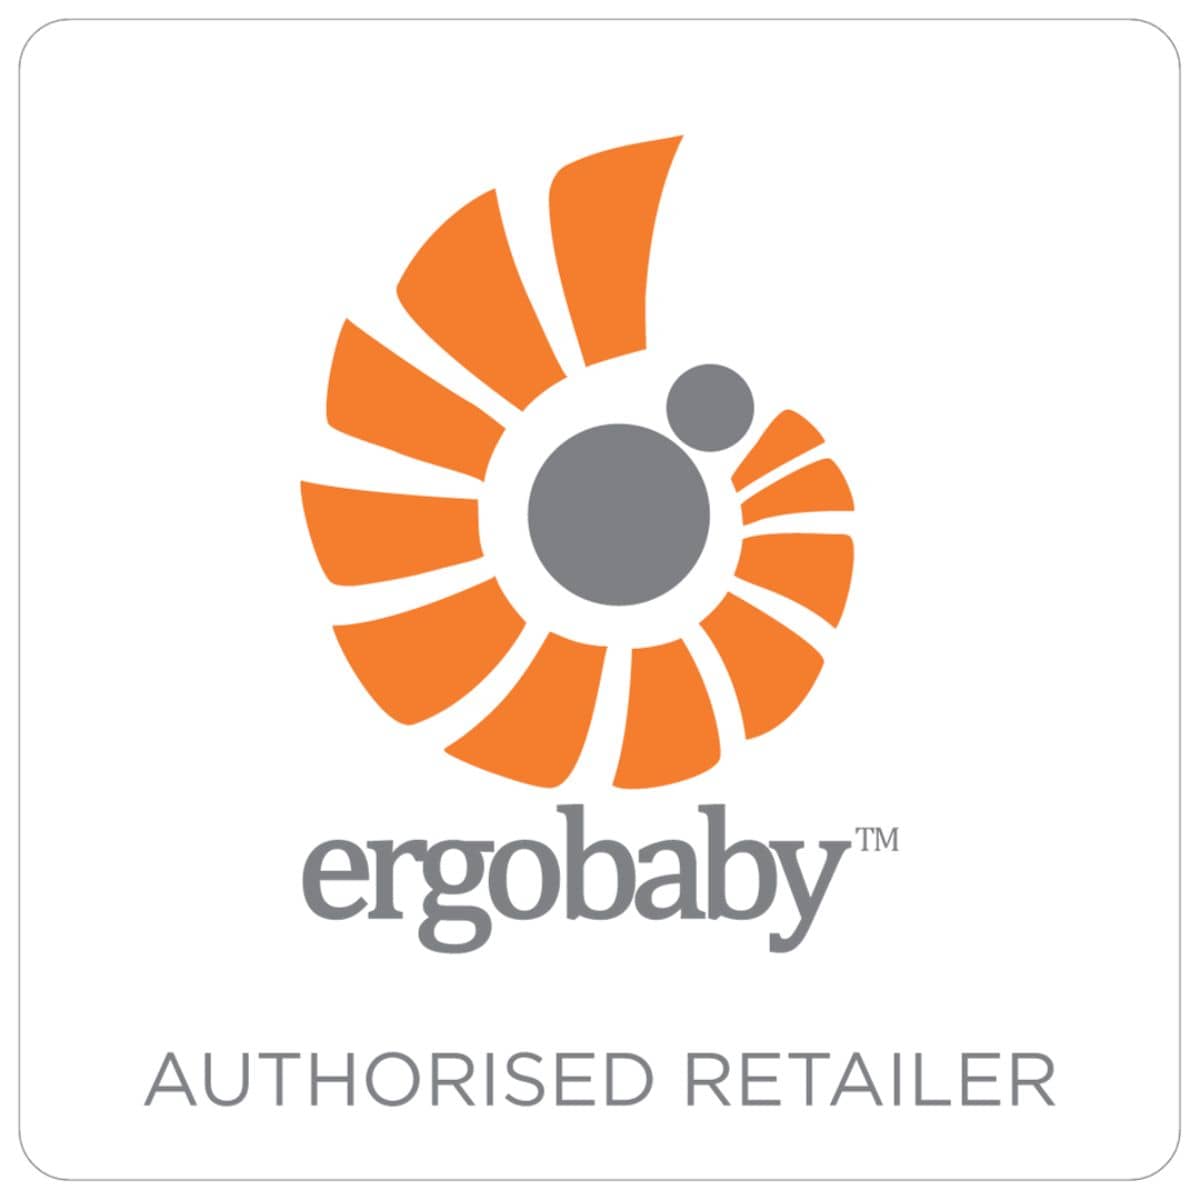 babyshop.com.au - ergobaby Authorised Retailer - Newcastle store and online stockist